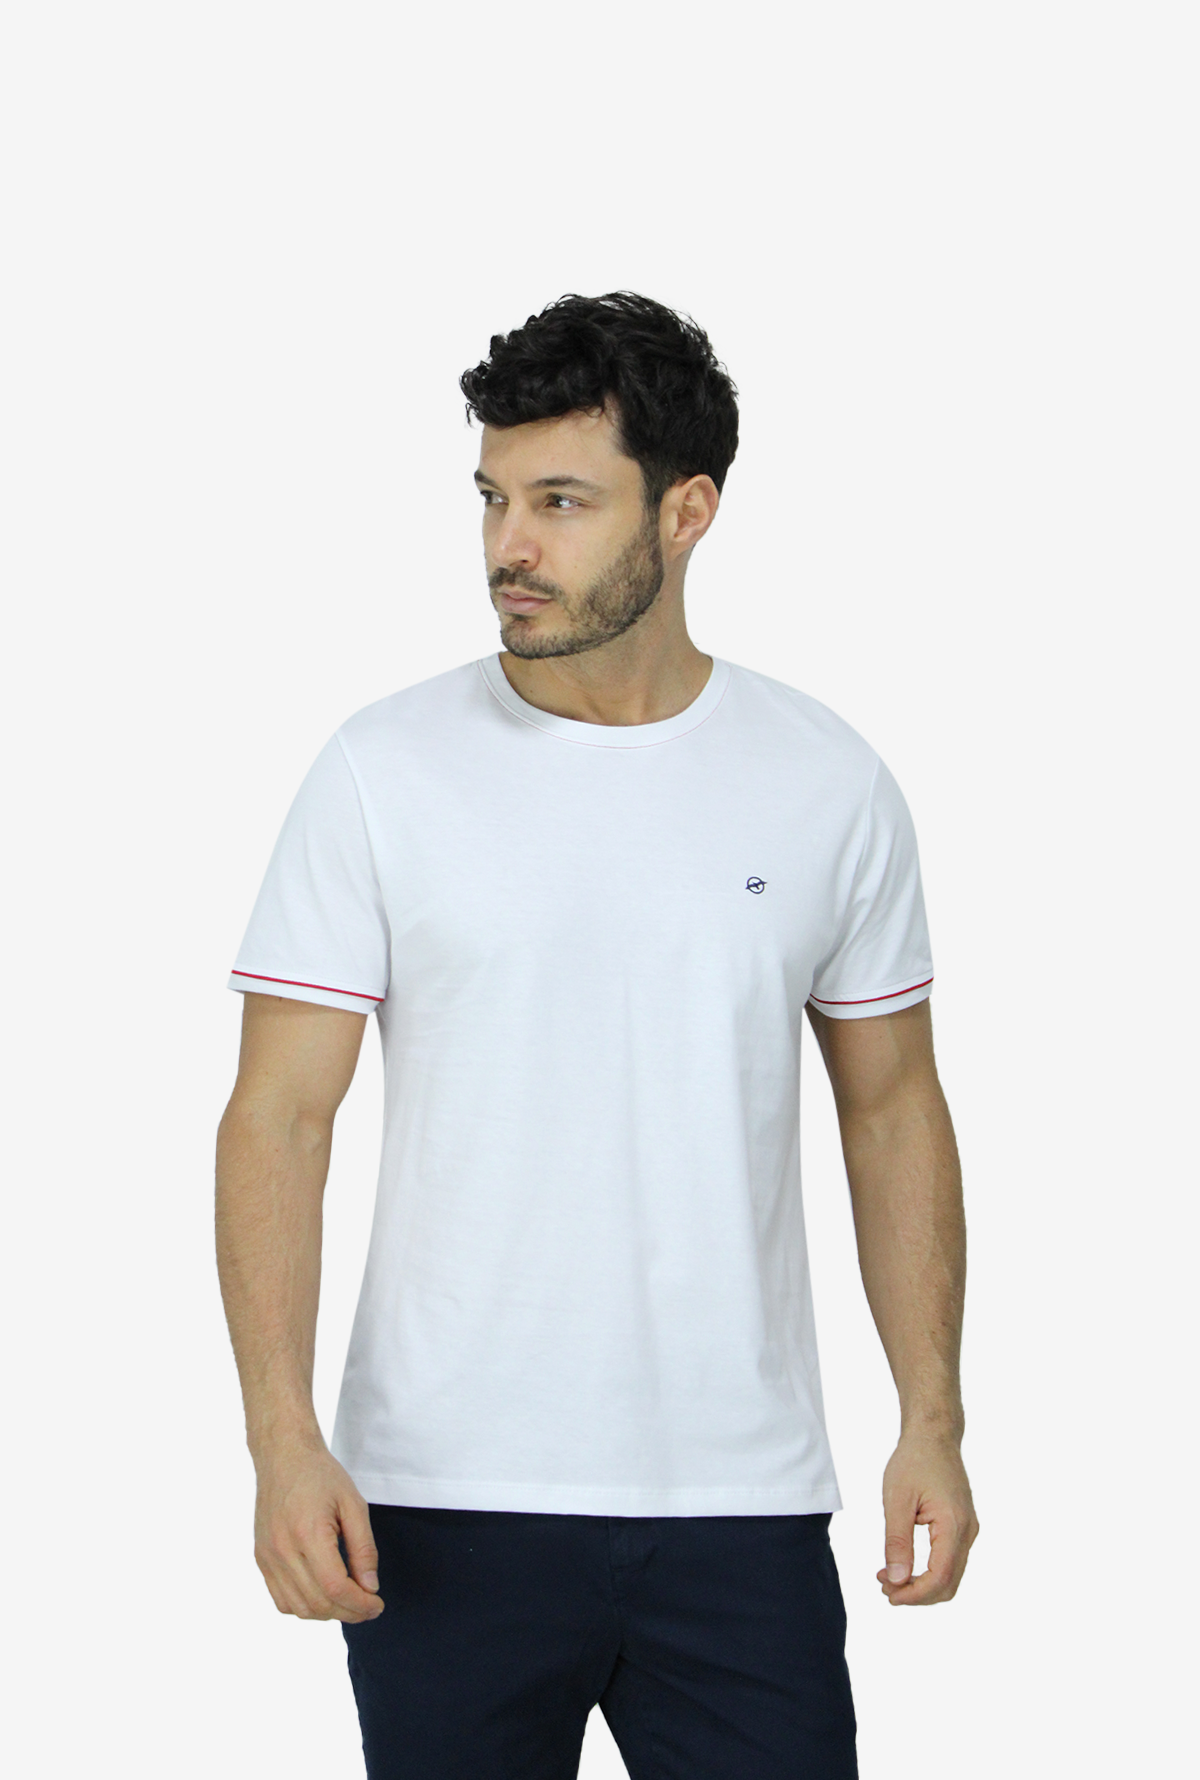 Camiseta BlancaPara Hombre Cuello Redondo DMTS3046